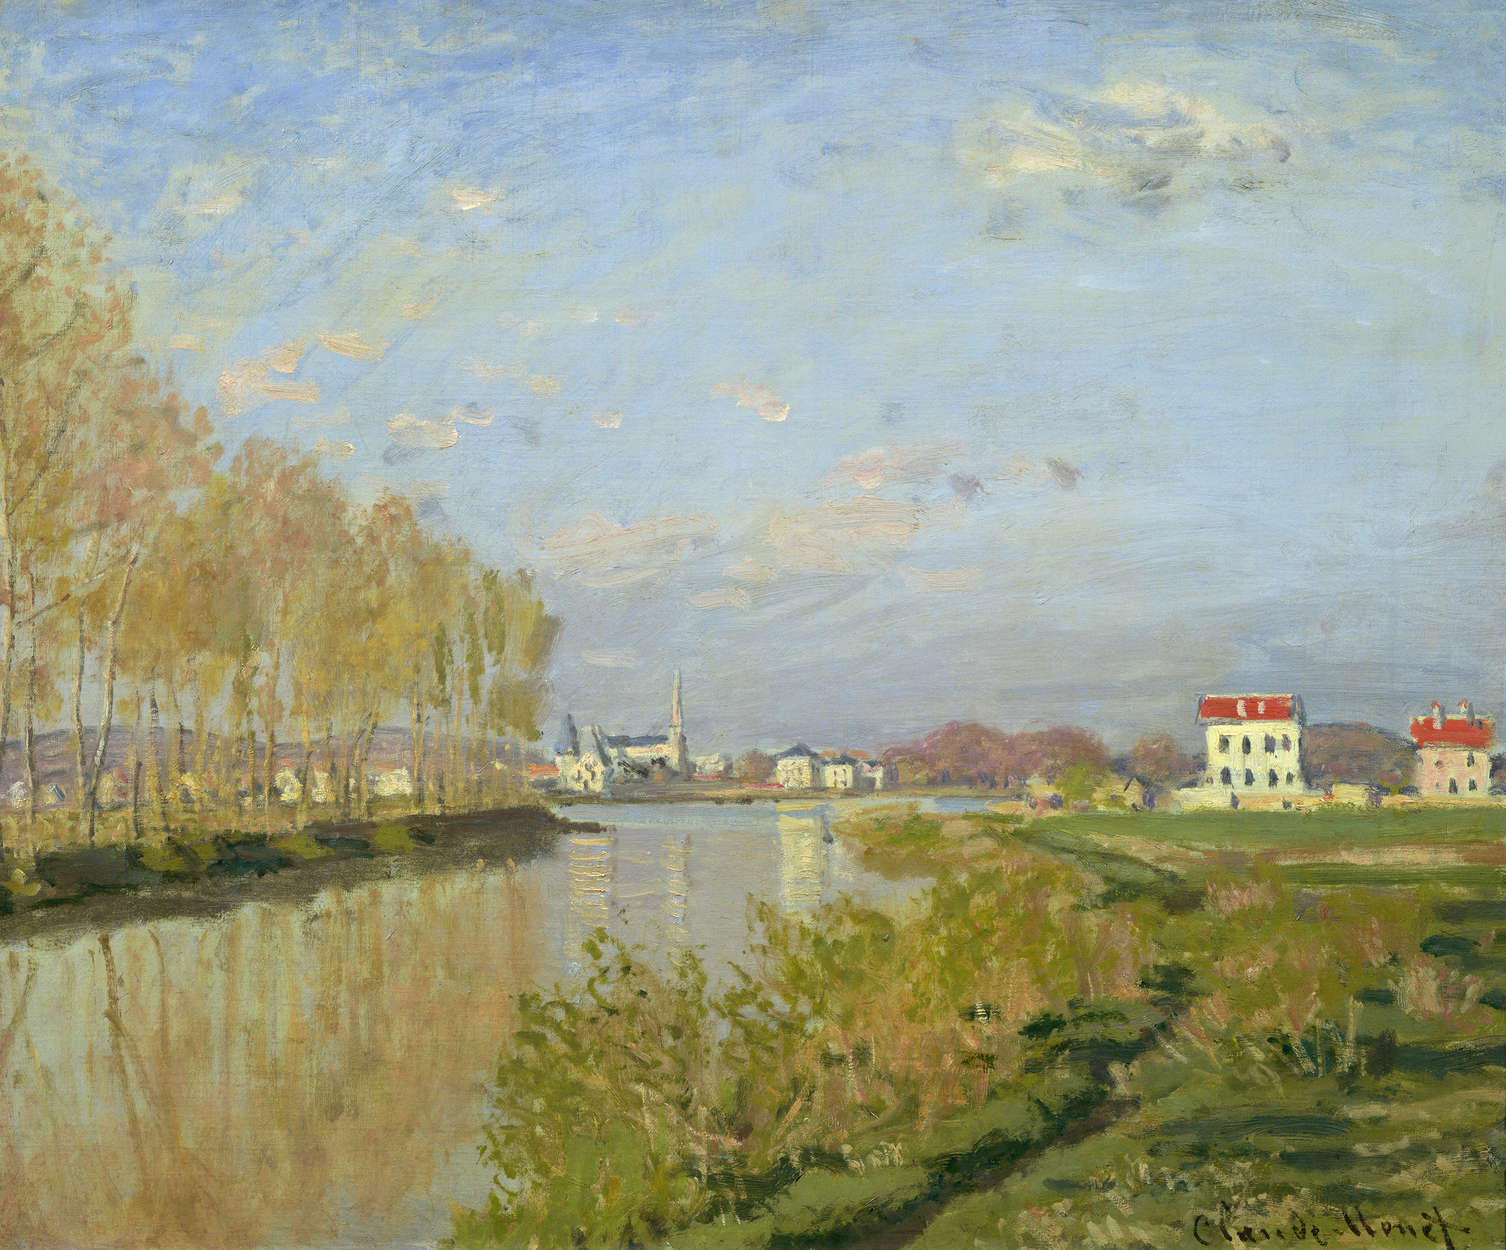             Fotomurali "La Senna ad Argenteuil" di Claude Monet
        